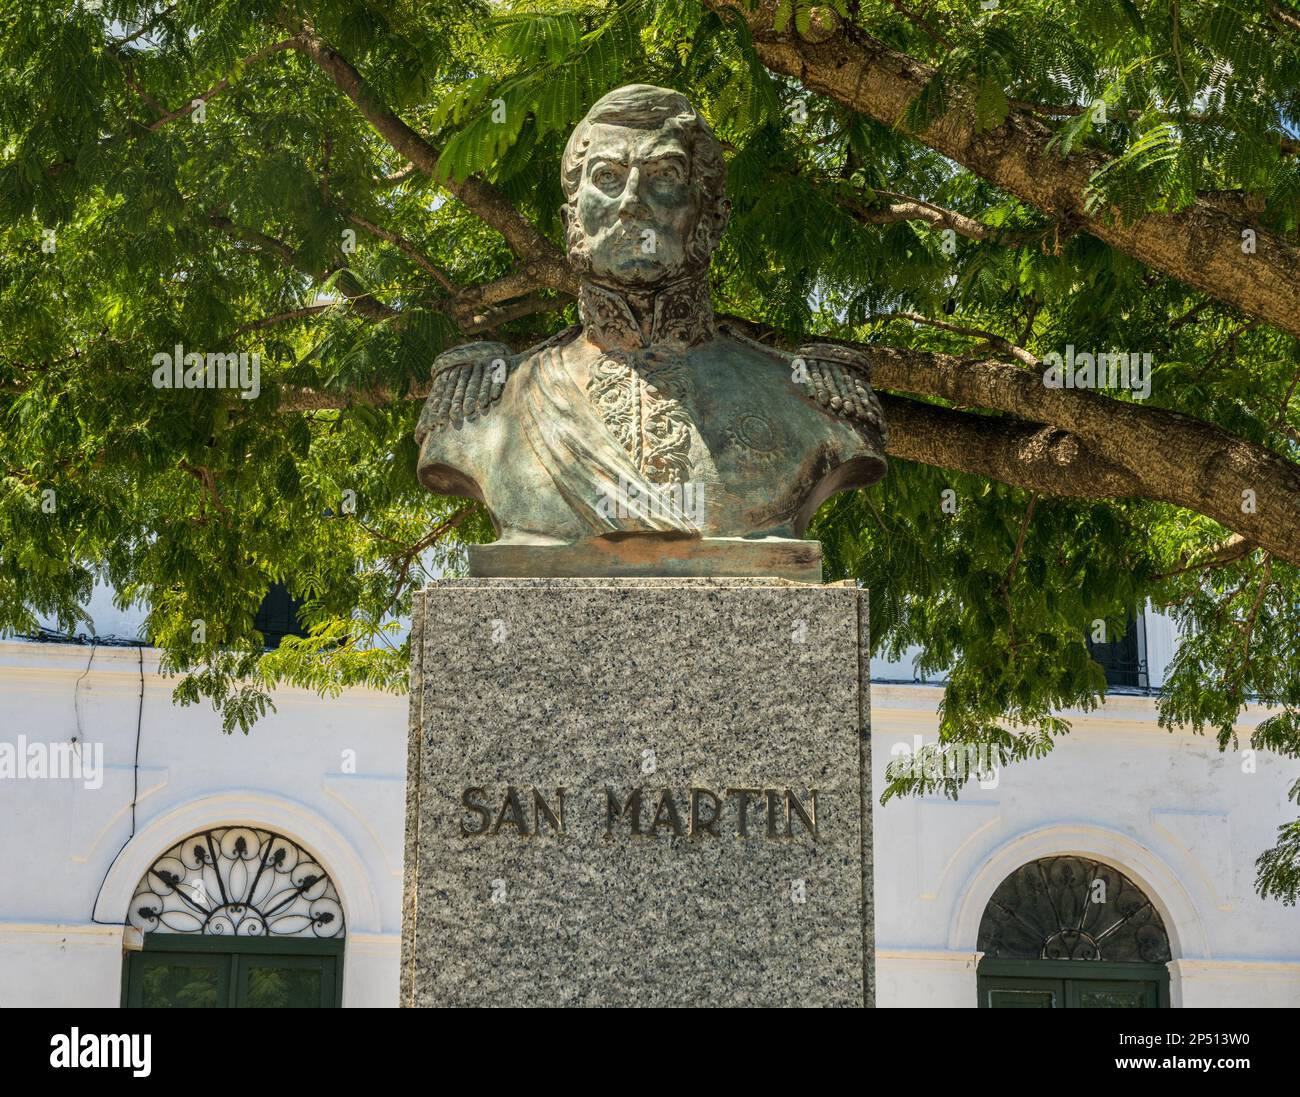 Statue de San Martin sur la place de la ville de Colonia del Sacramento en Uruguay Banque D'Images